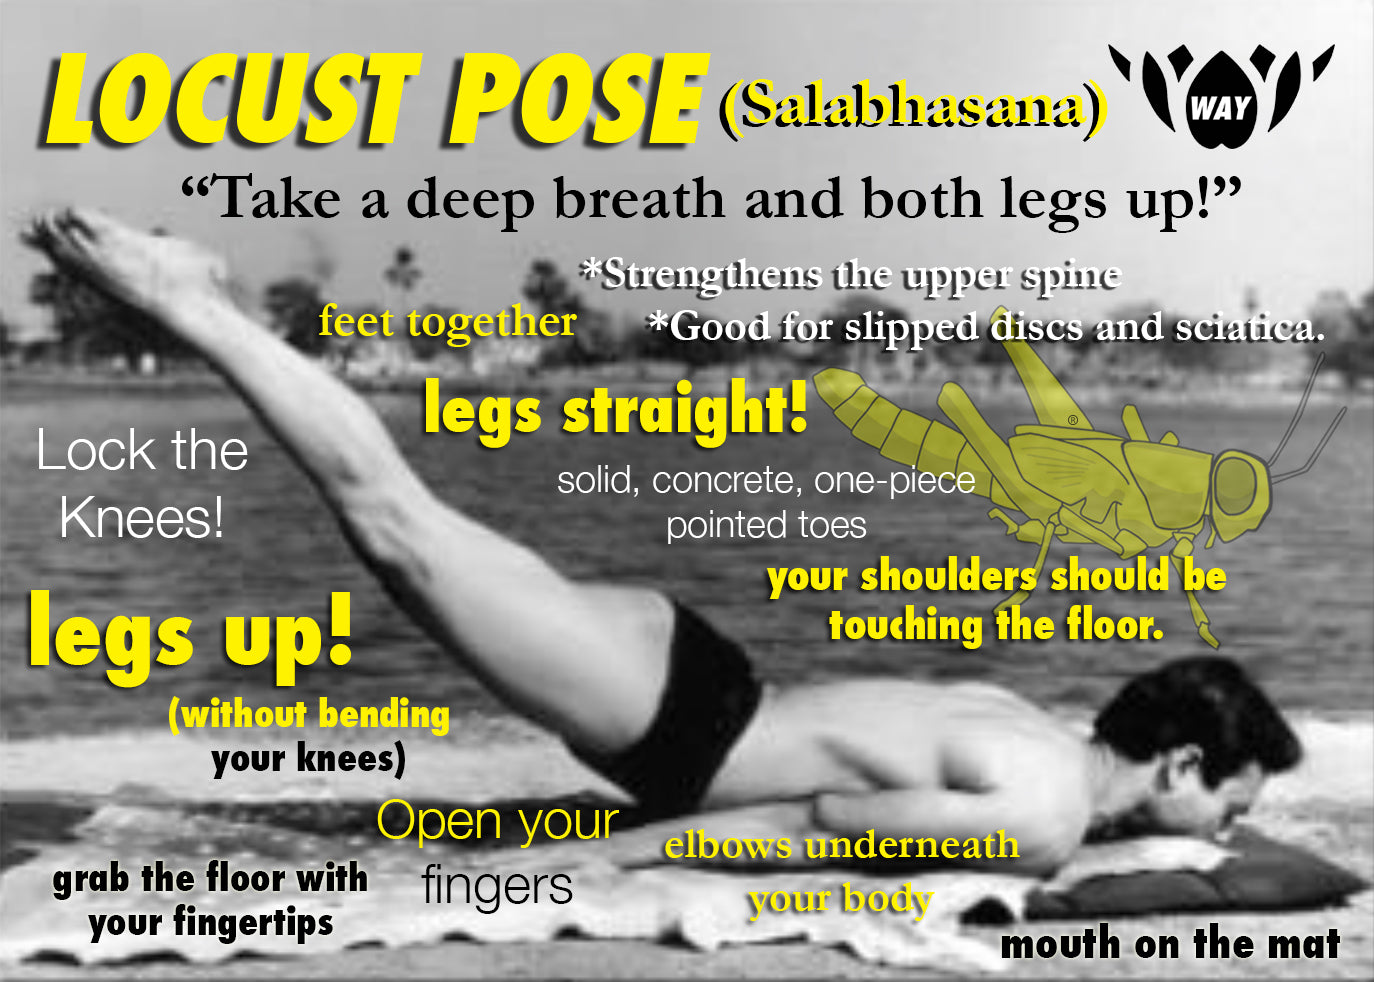 Shalabhasana - Locust Pose: How To Do, Benefits And Precautions